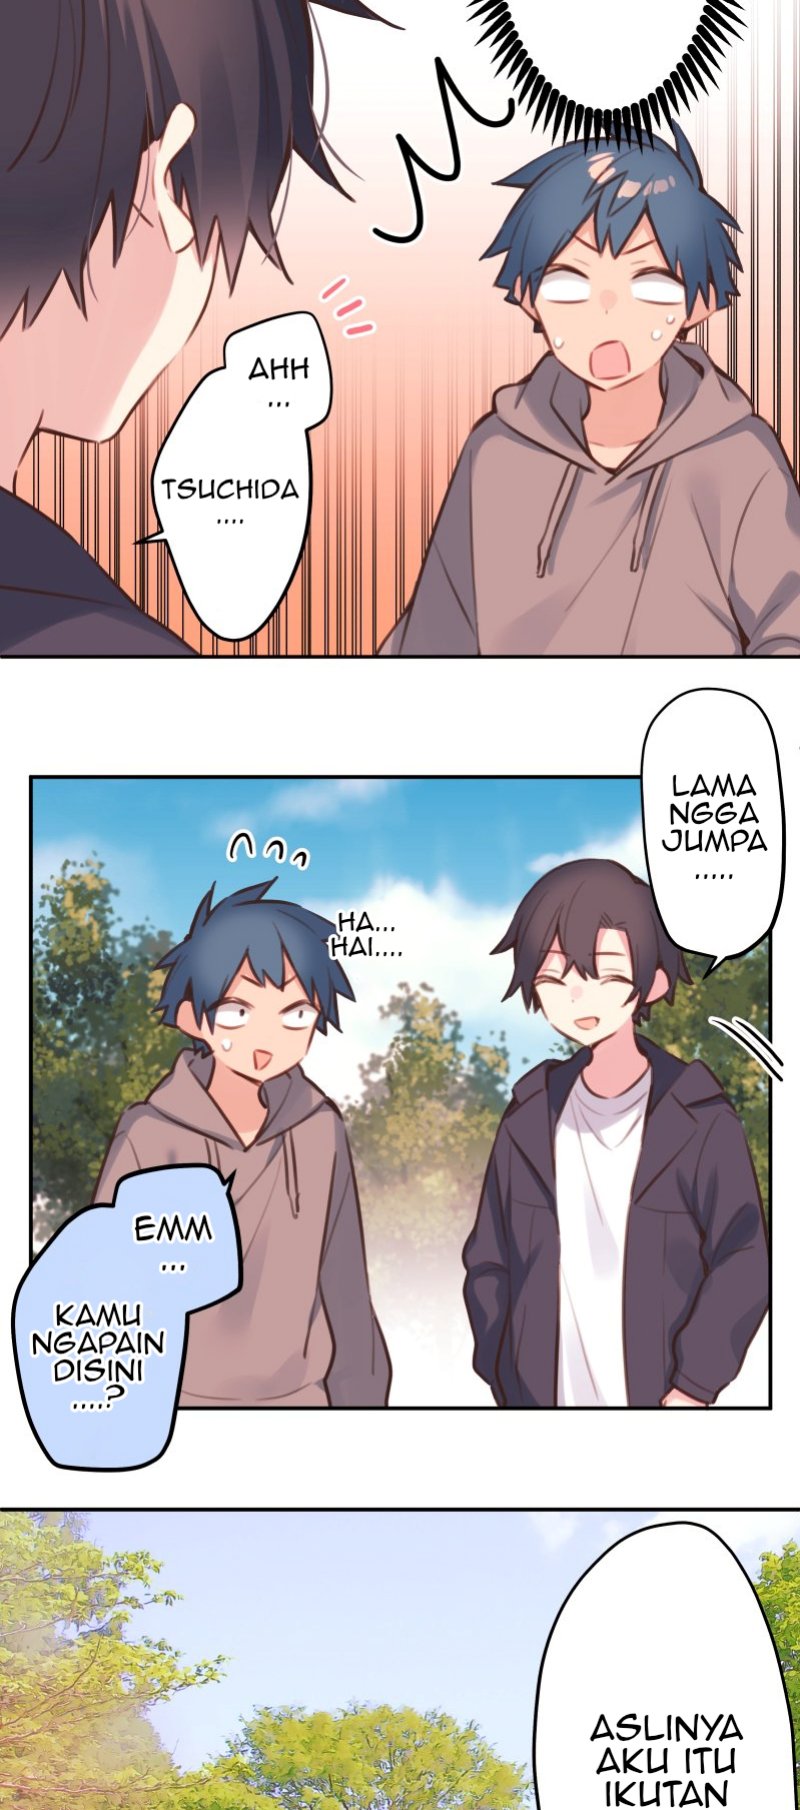 Waka-chan Is Flirty Again Chapter 84